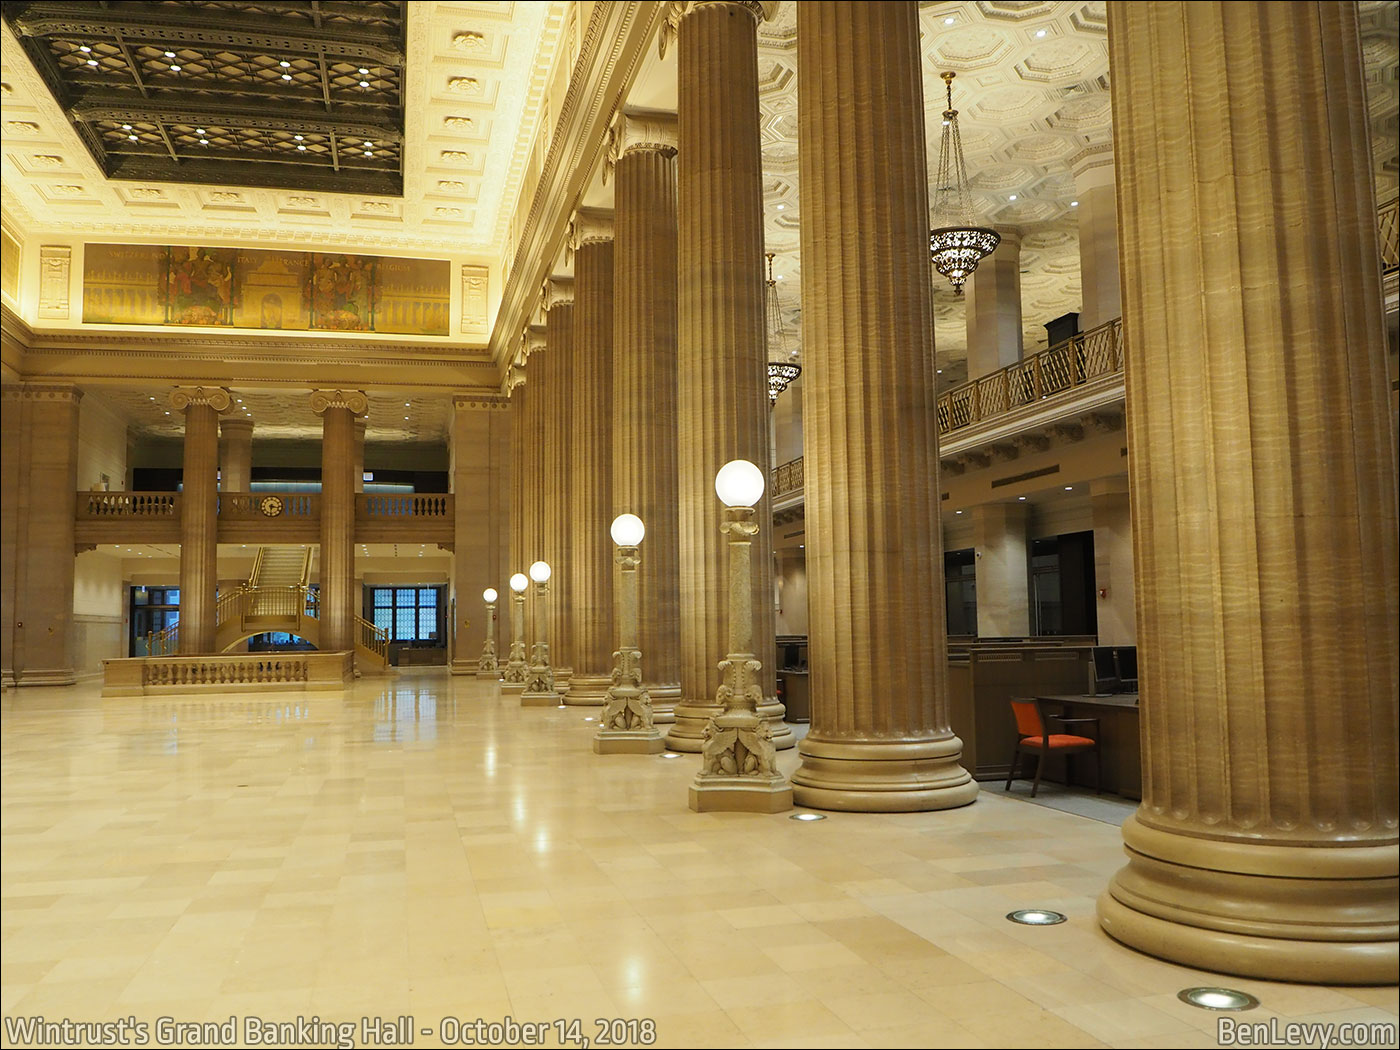 Columns at Wintrust's Grand Banking Hall